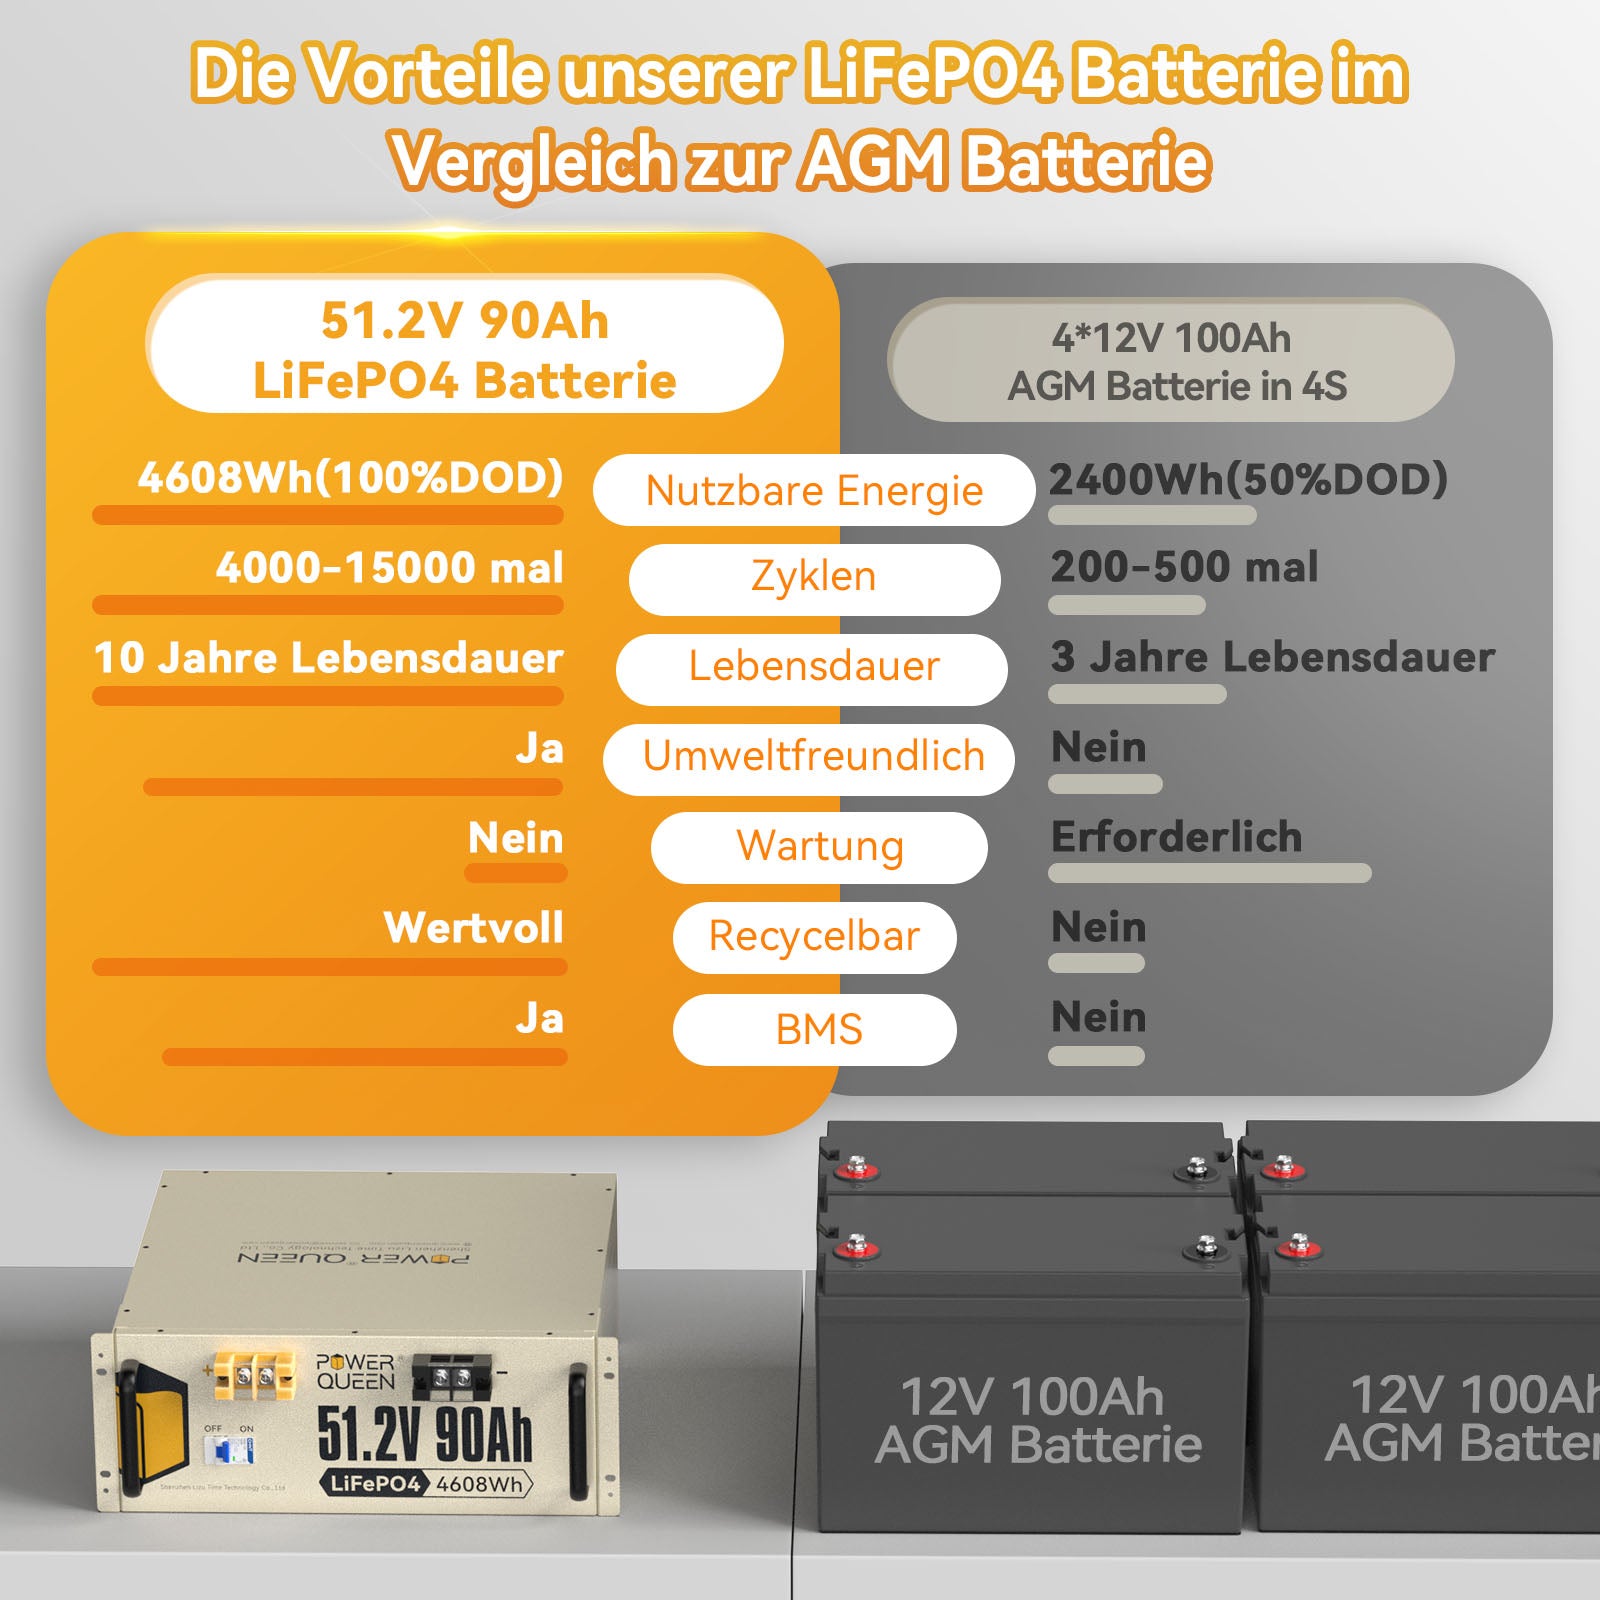 【0% BTW】Power Queen 51,2 V 90 Ah LiFePO4-batterij, ingebouwd 90 A BMS